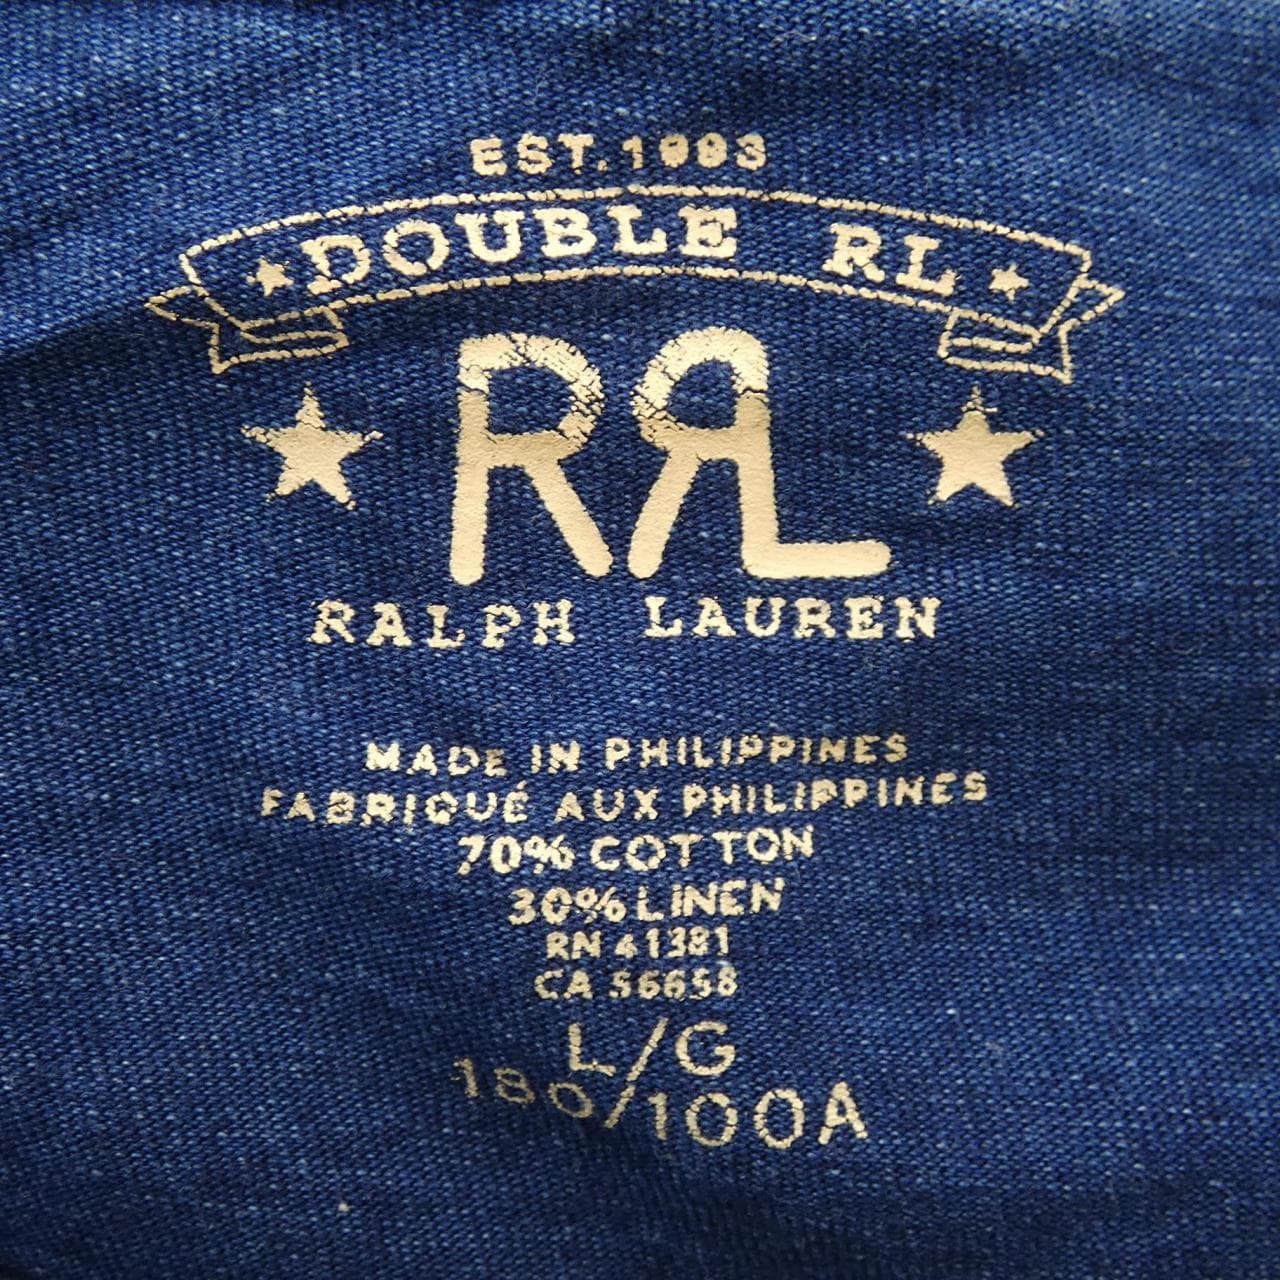 Double Earl RRL T-shirt